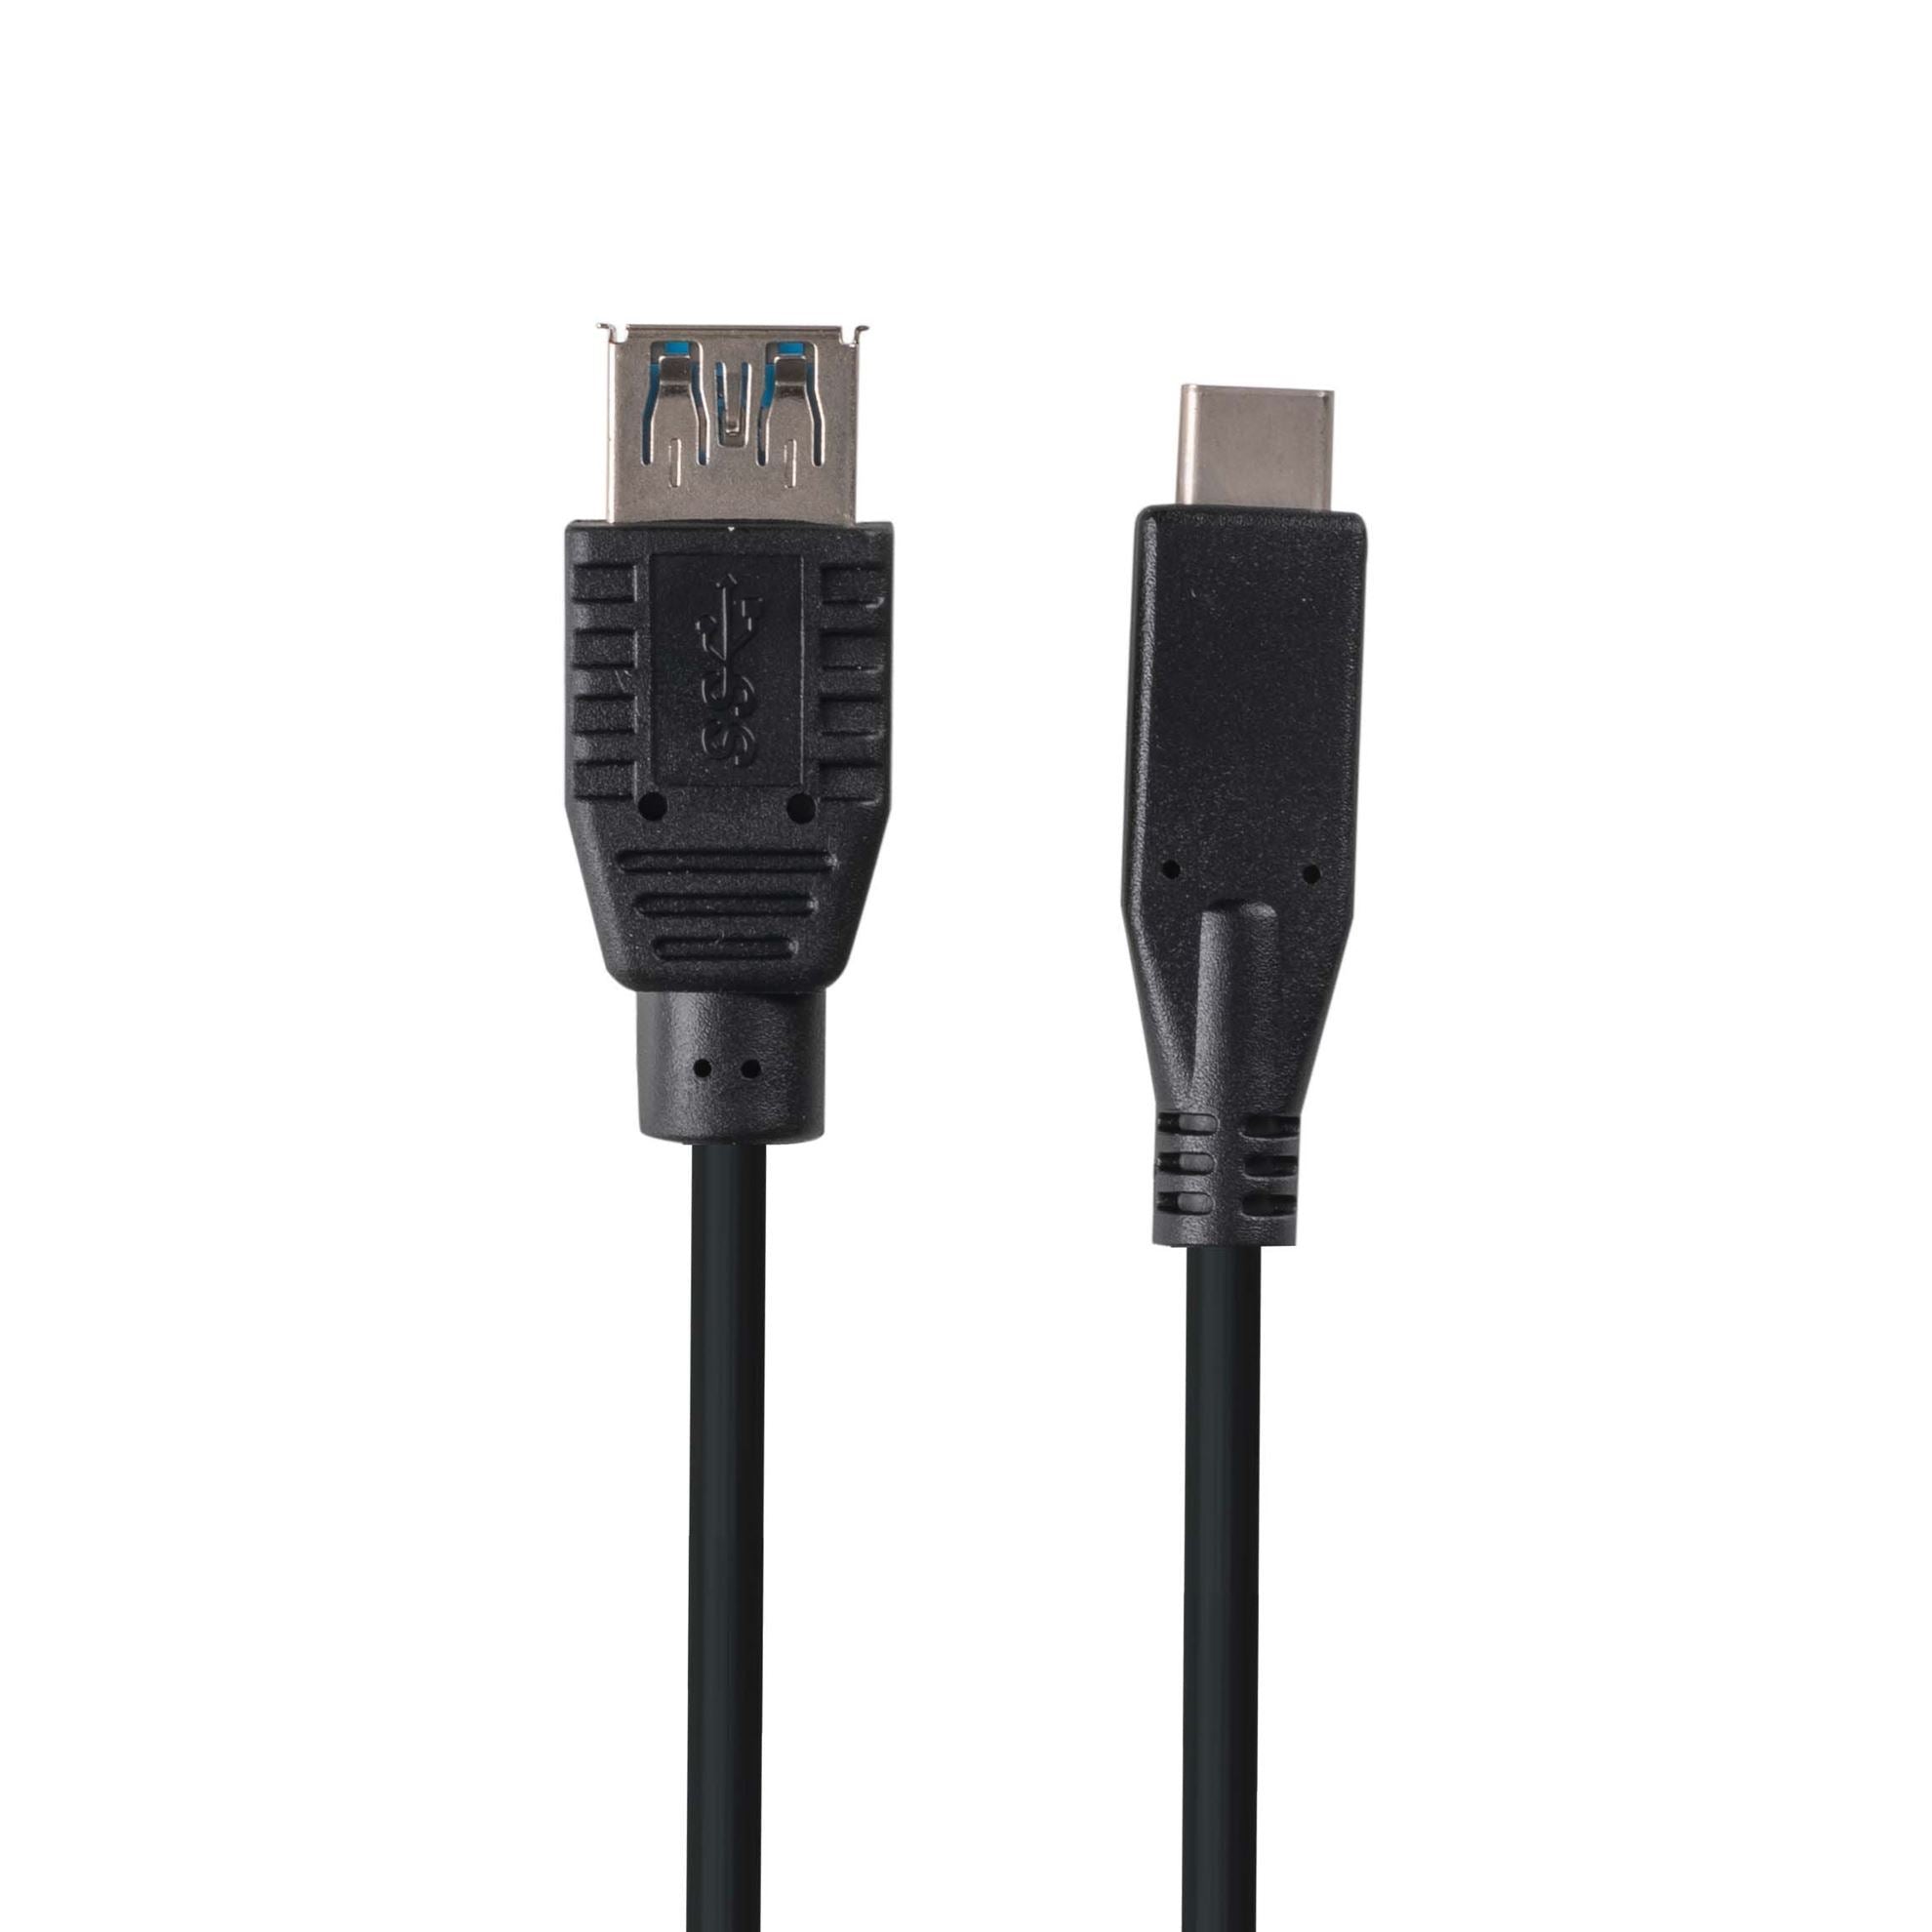 DYNAMIX_1M,_USB_3.1_USB-C_Male_to_USB-A_Female_Cable._Black_Colour. 1152